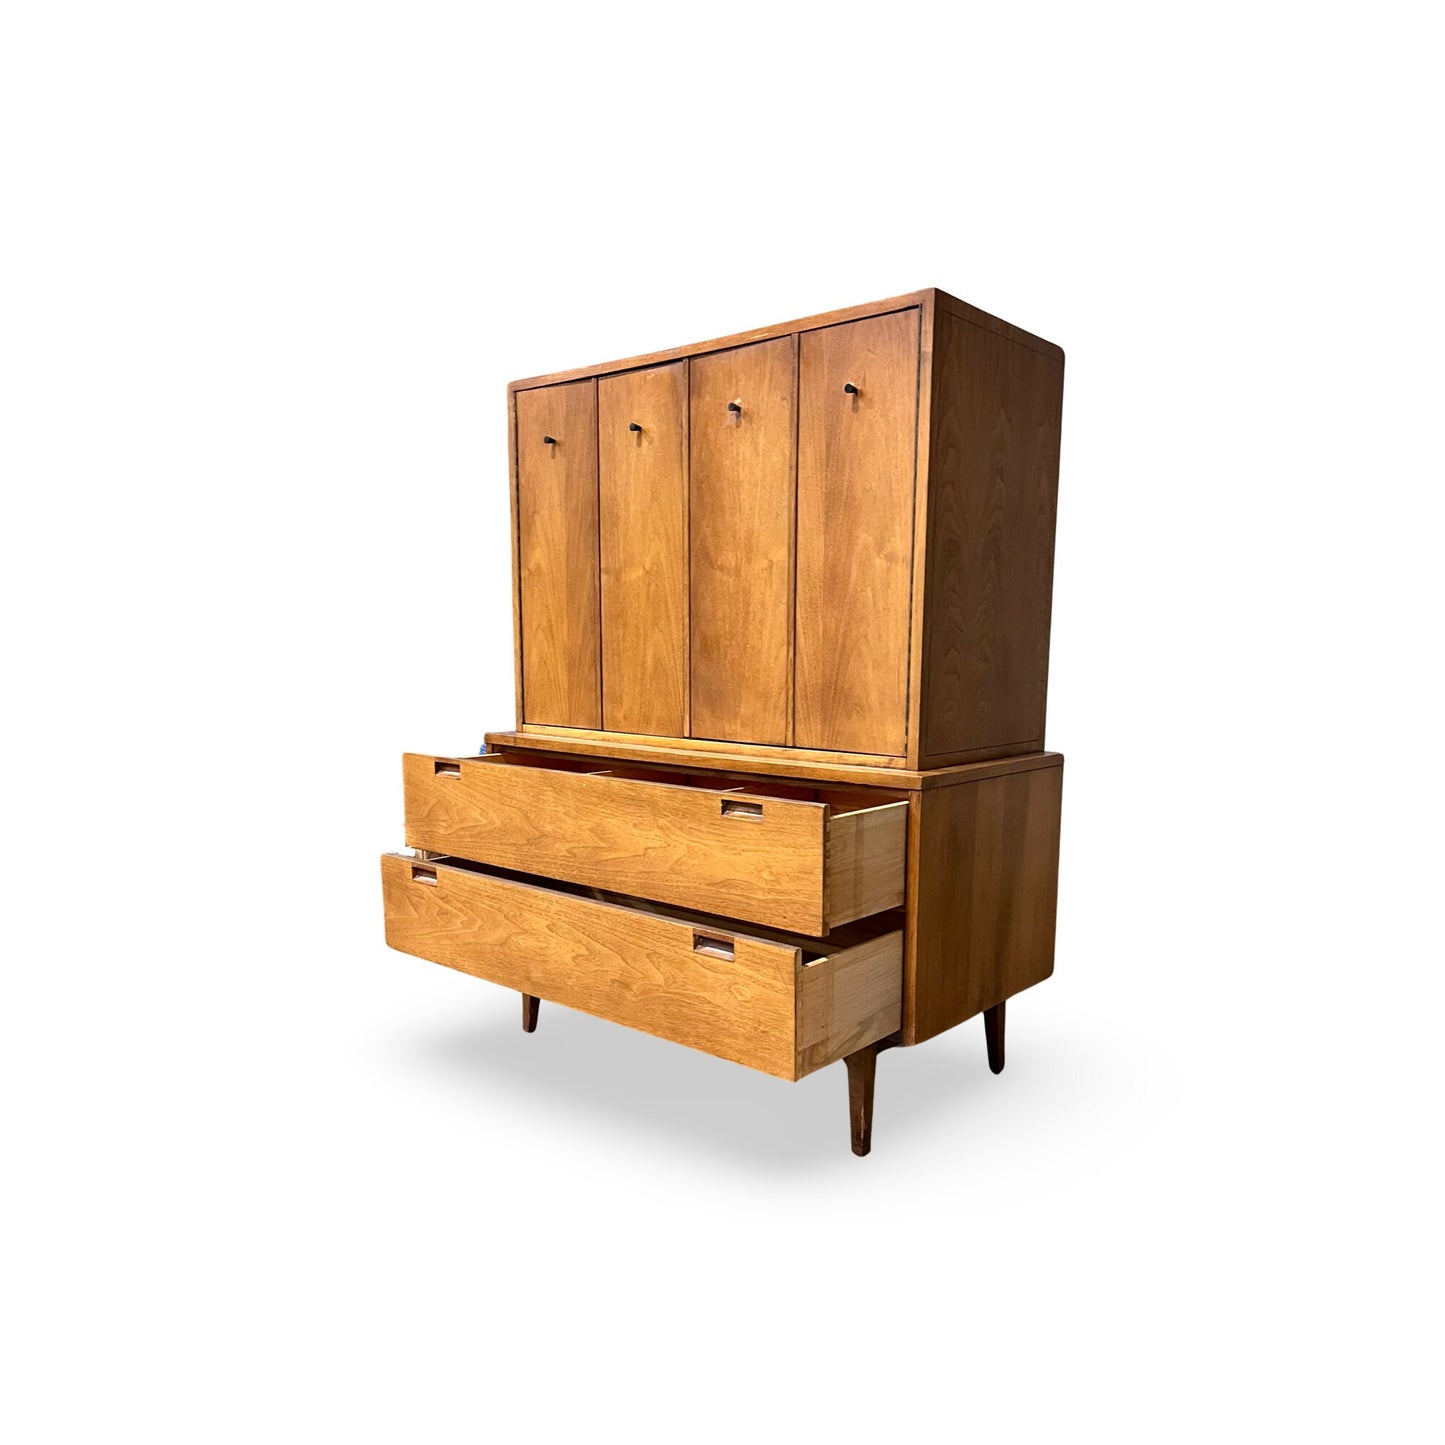 Elegant American MCM dresser with brass knobs and deep storage drawers.